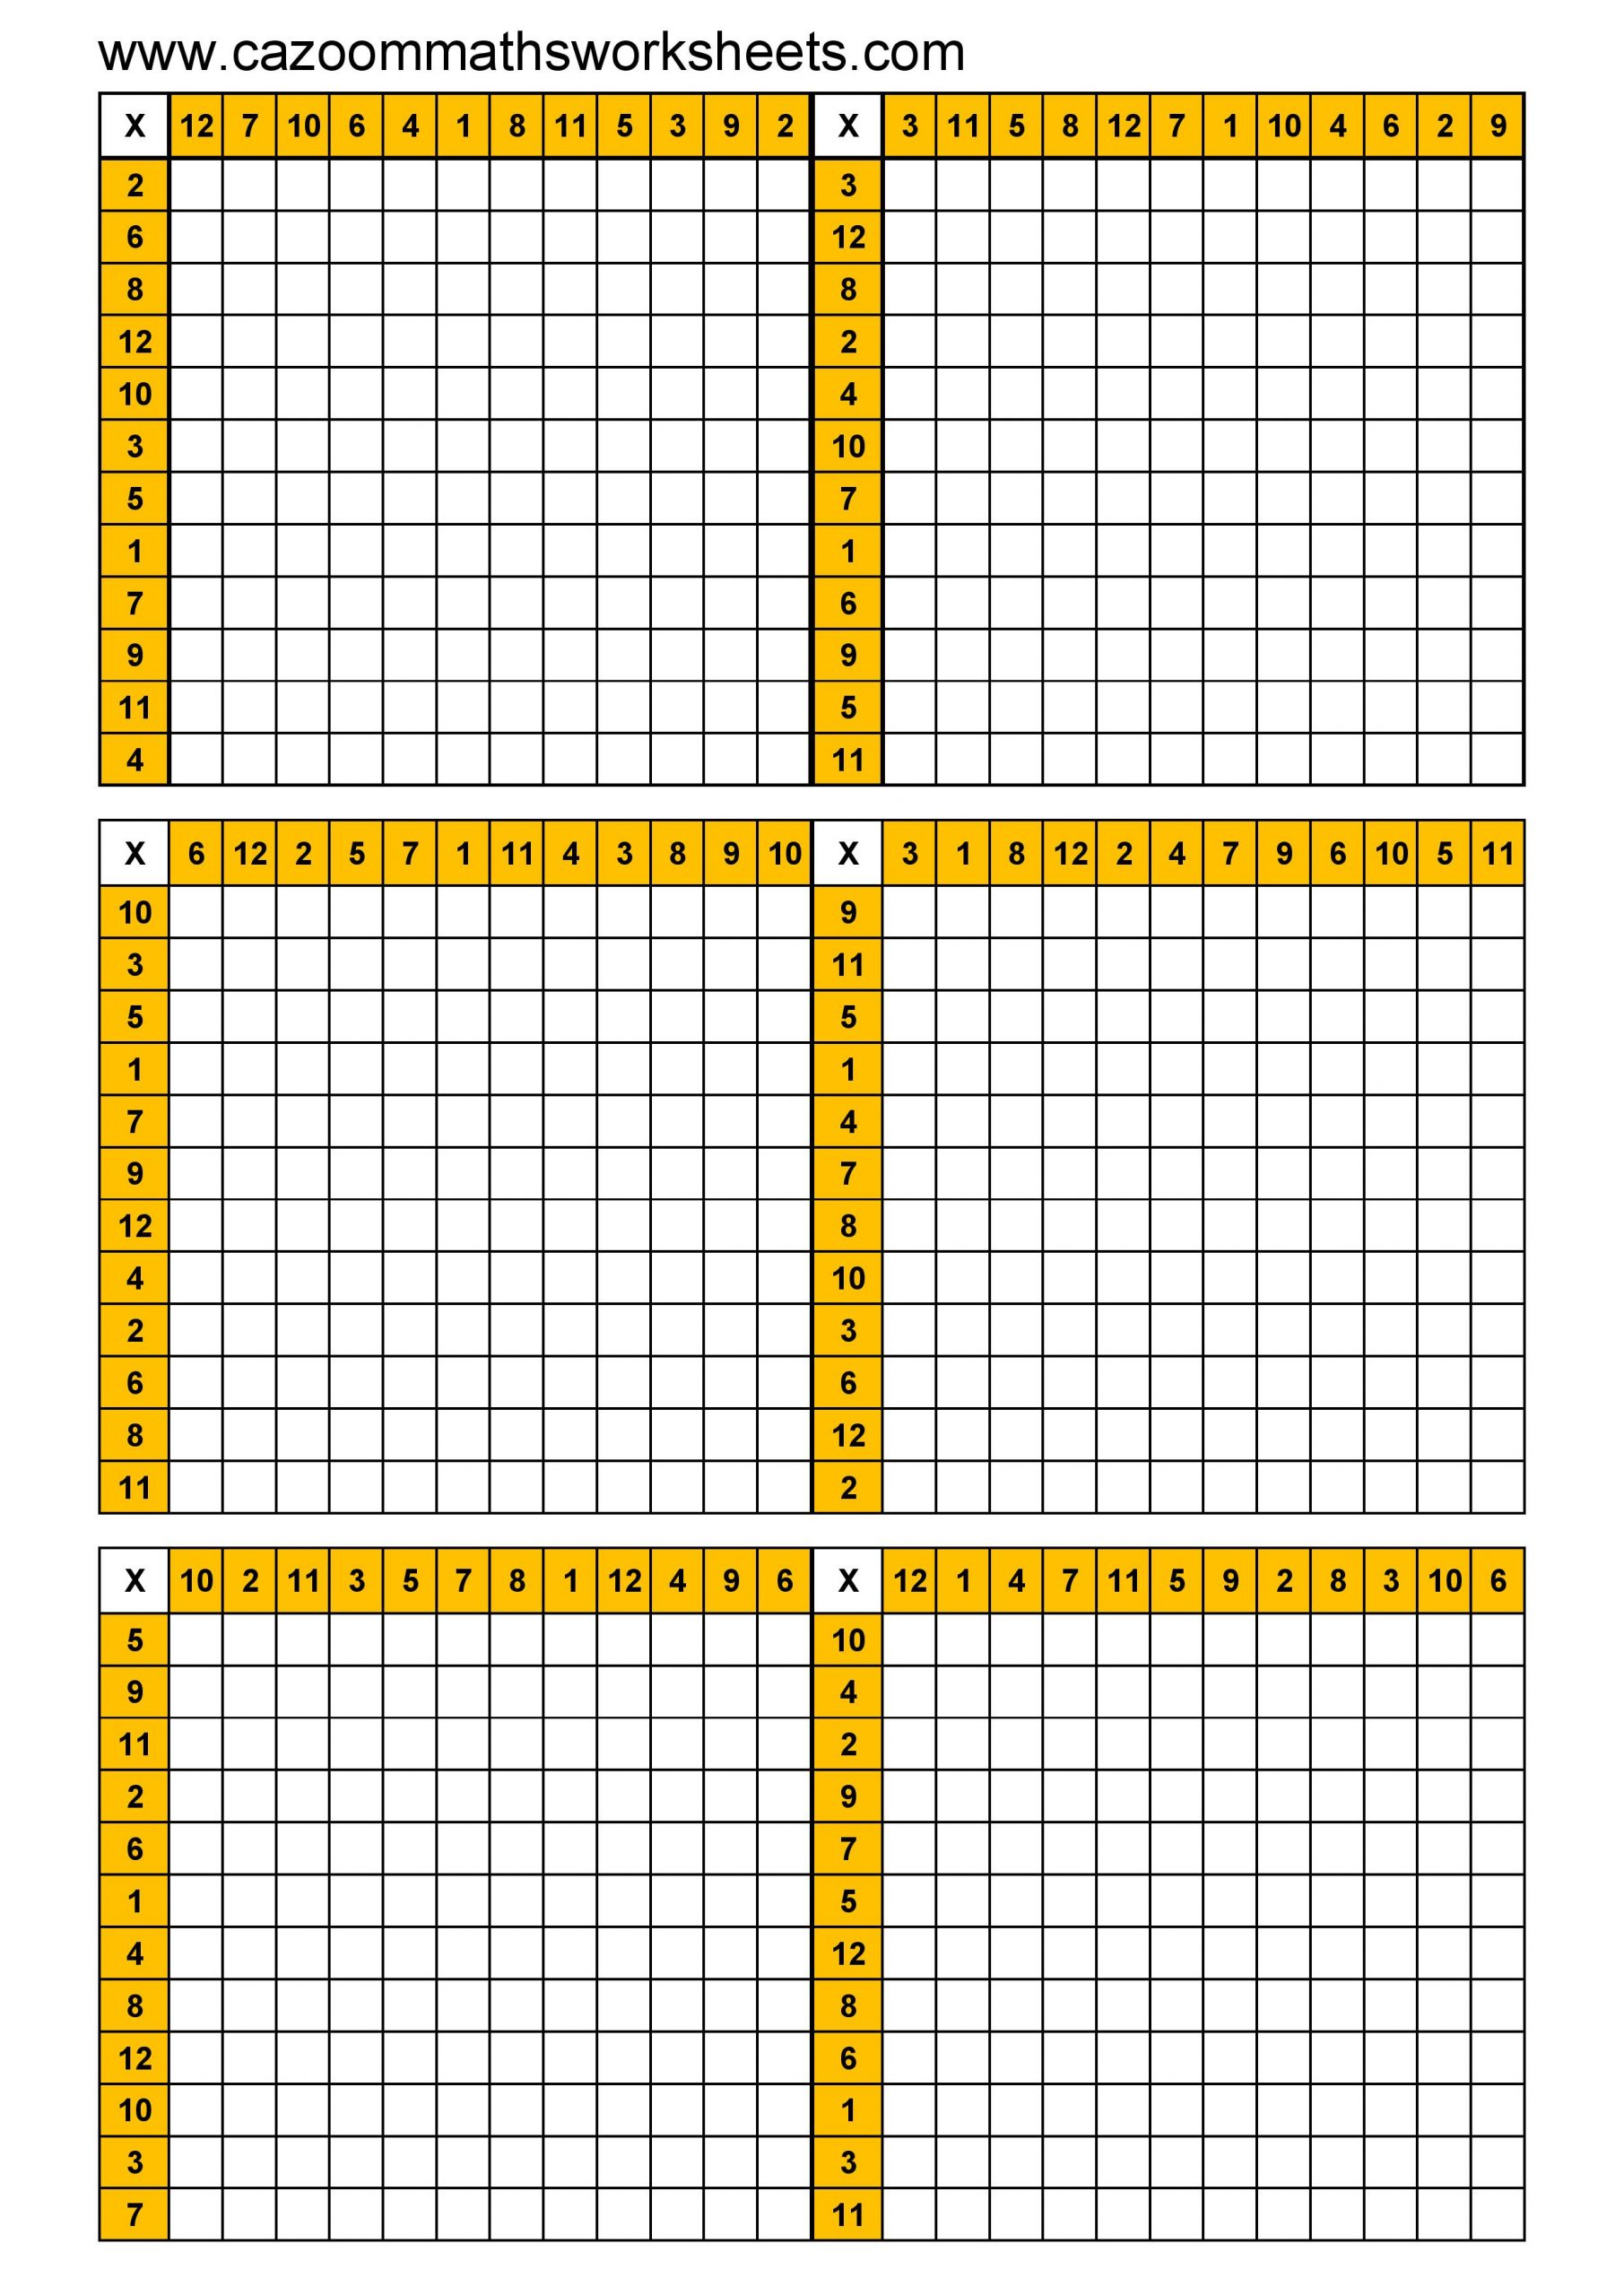 blank multiplication chart 1 20